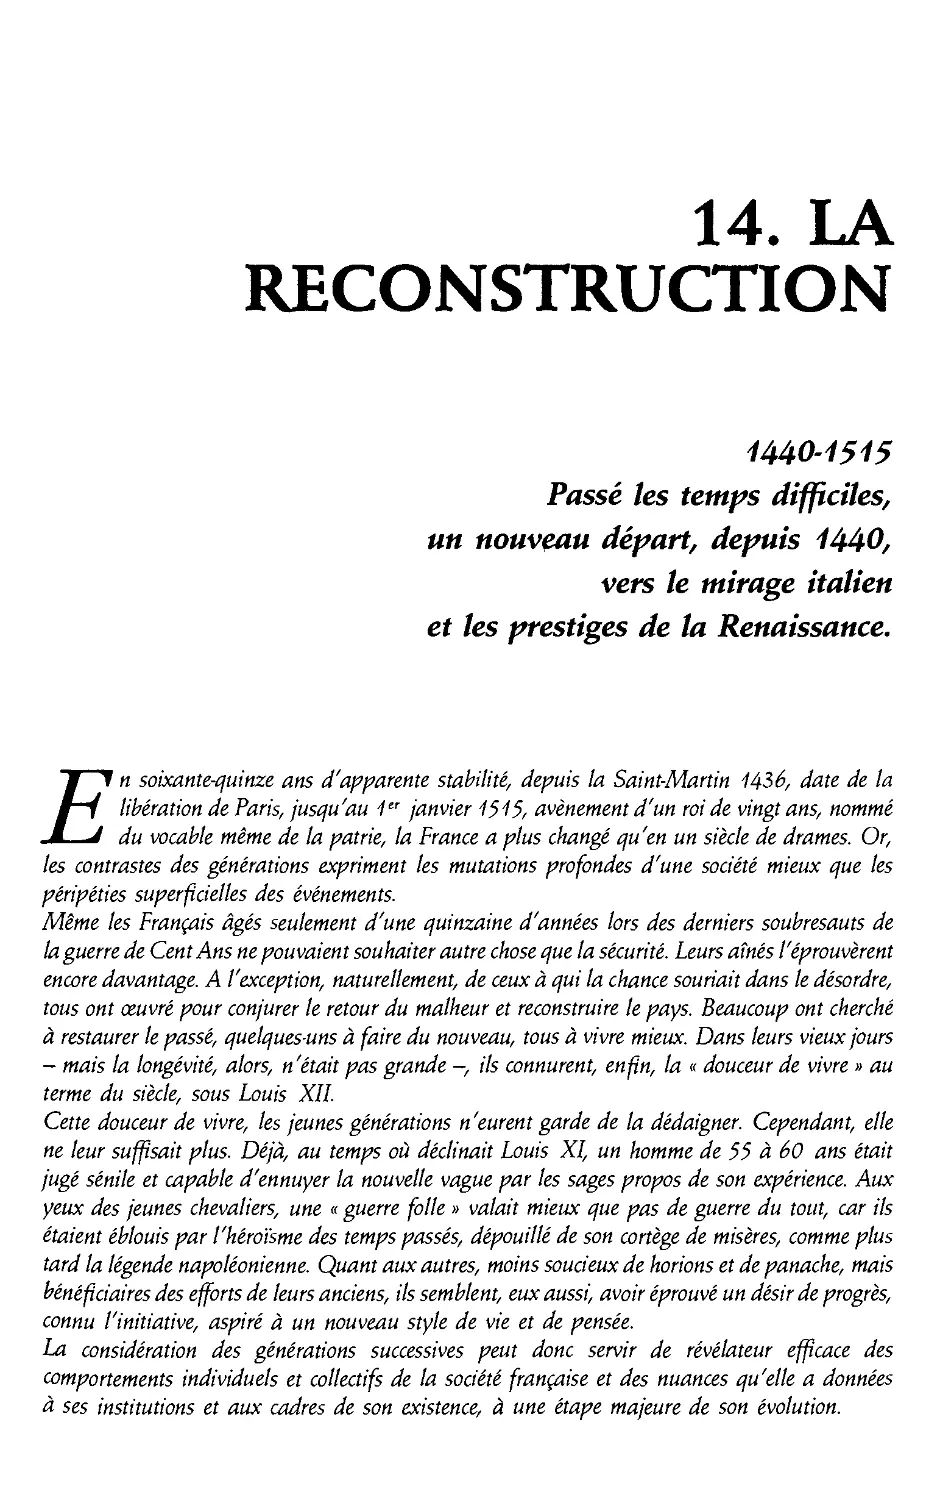 14. La reconstruction, 1440-1515 [343]